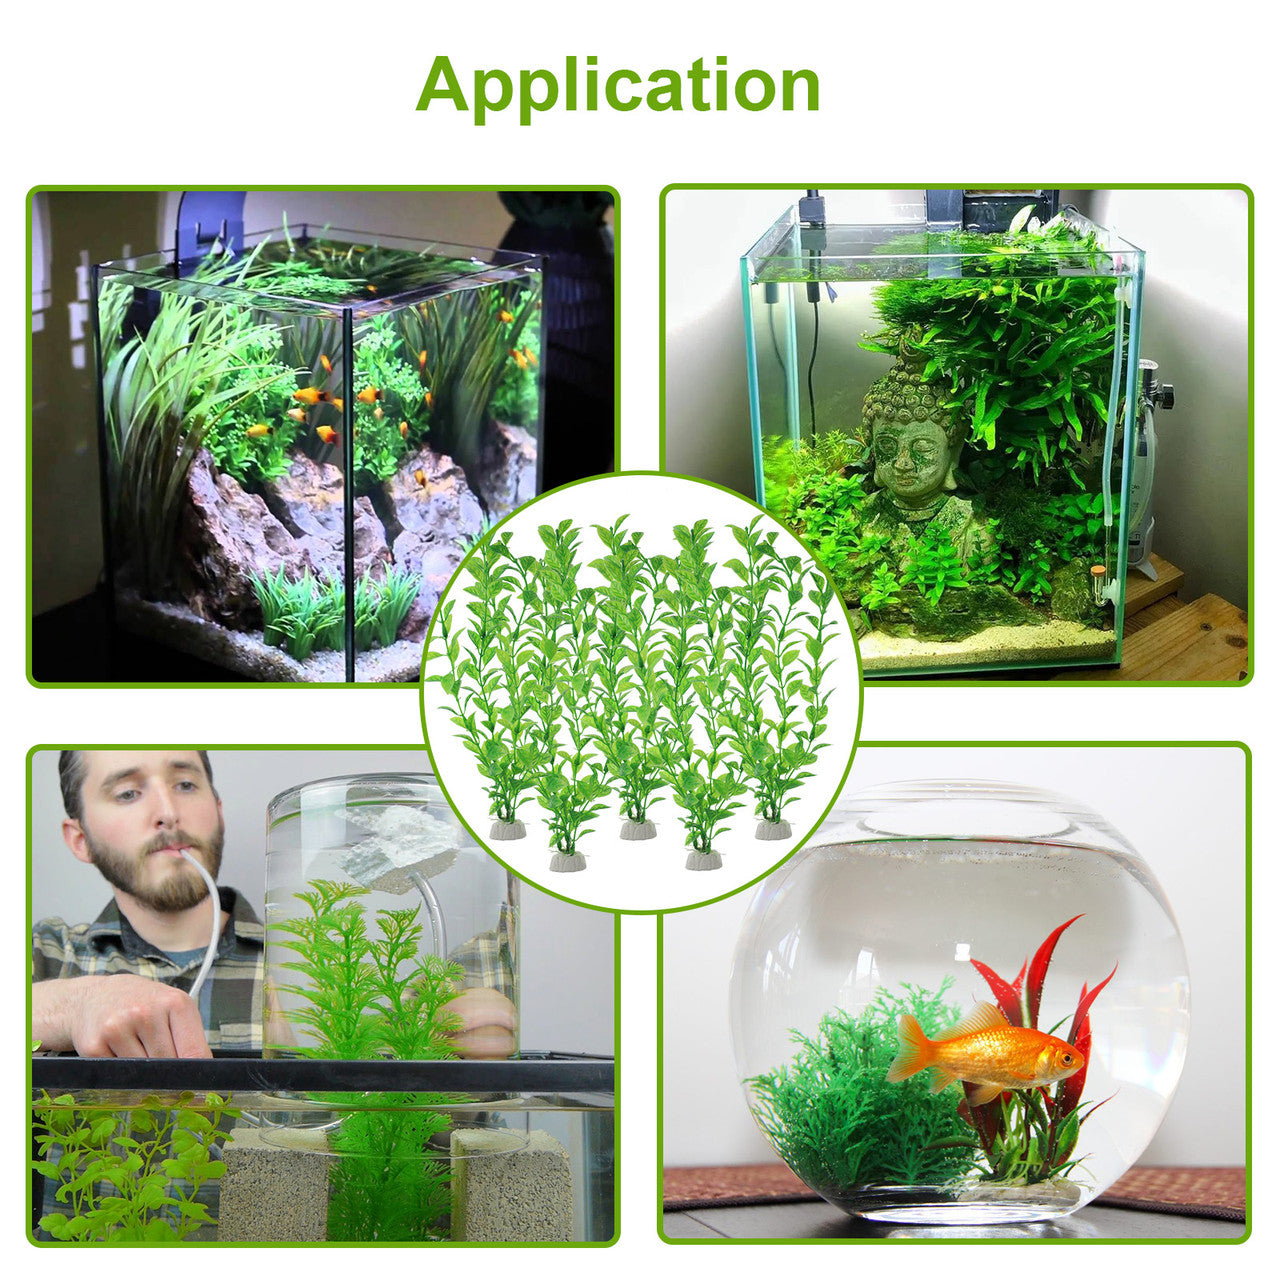 5 Landscaping Artificial Water Plants for Aquarium